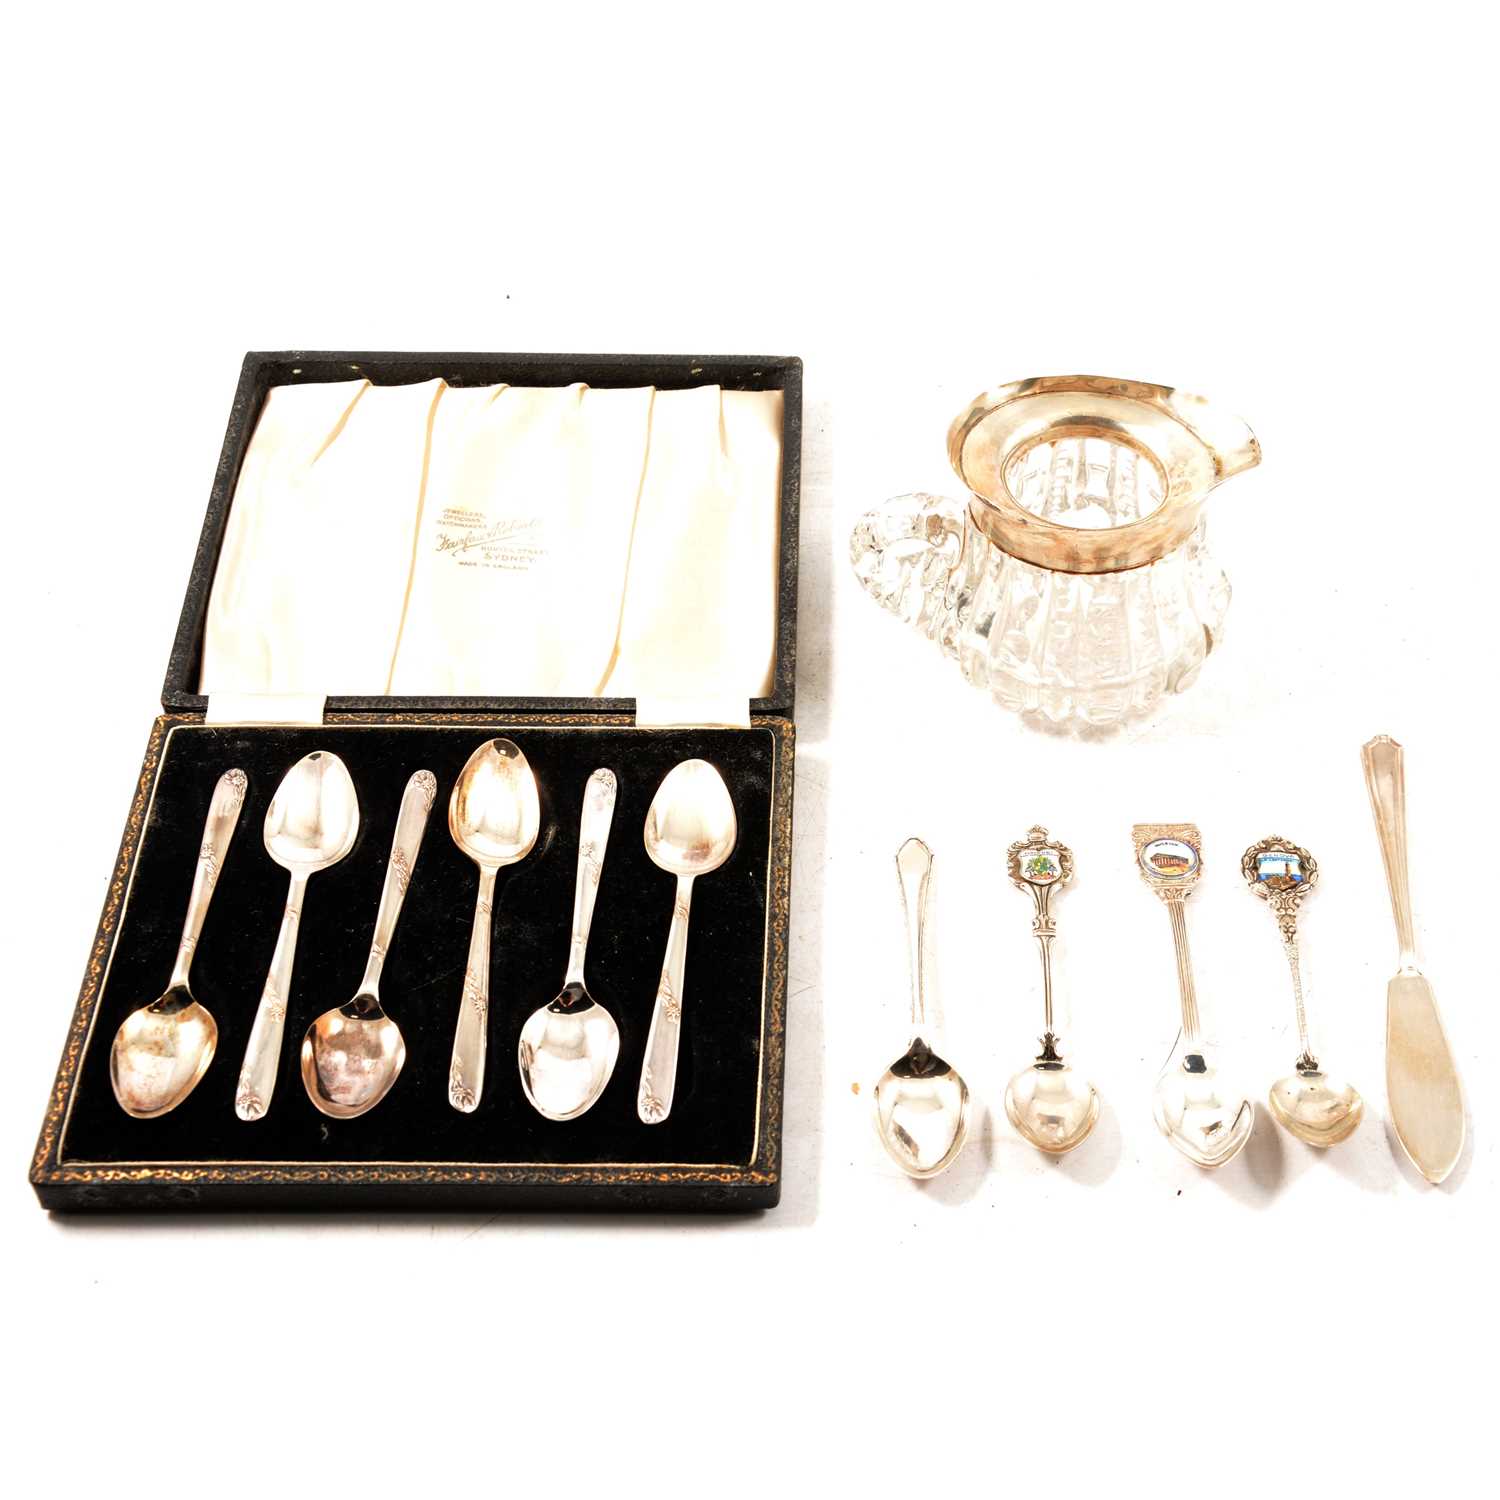 Lot 316 - Cased set of six silver teaspoon, condiment set, mustard pot, silver spoons, napkin rings, small jug.